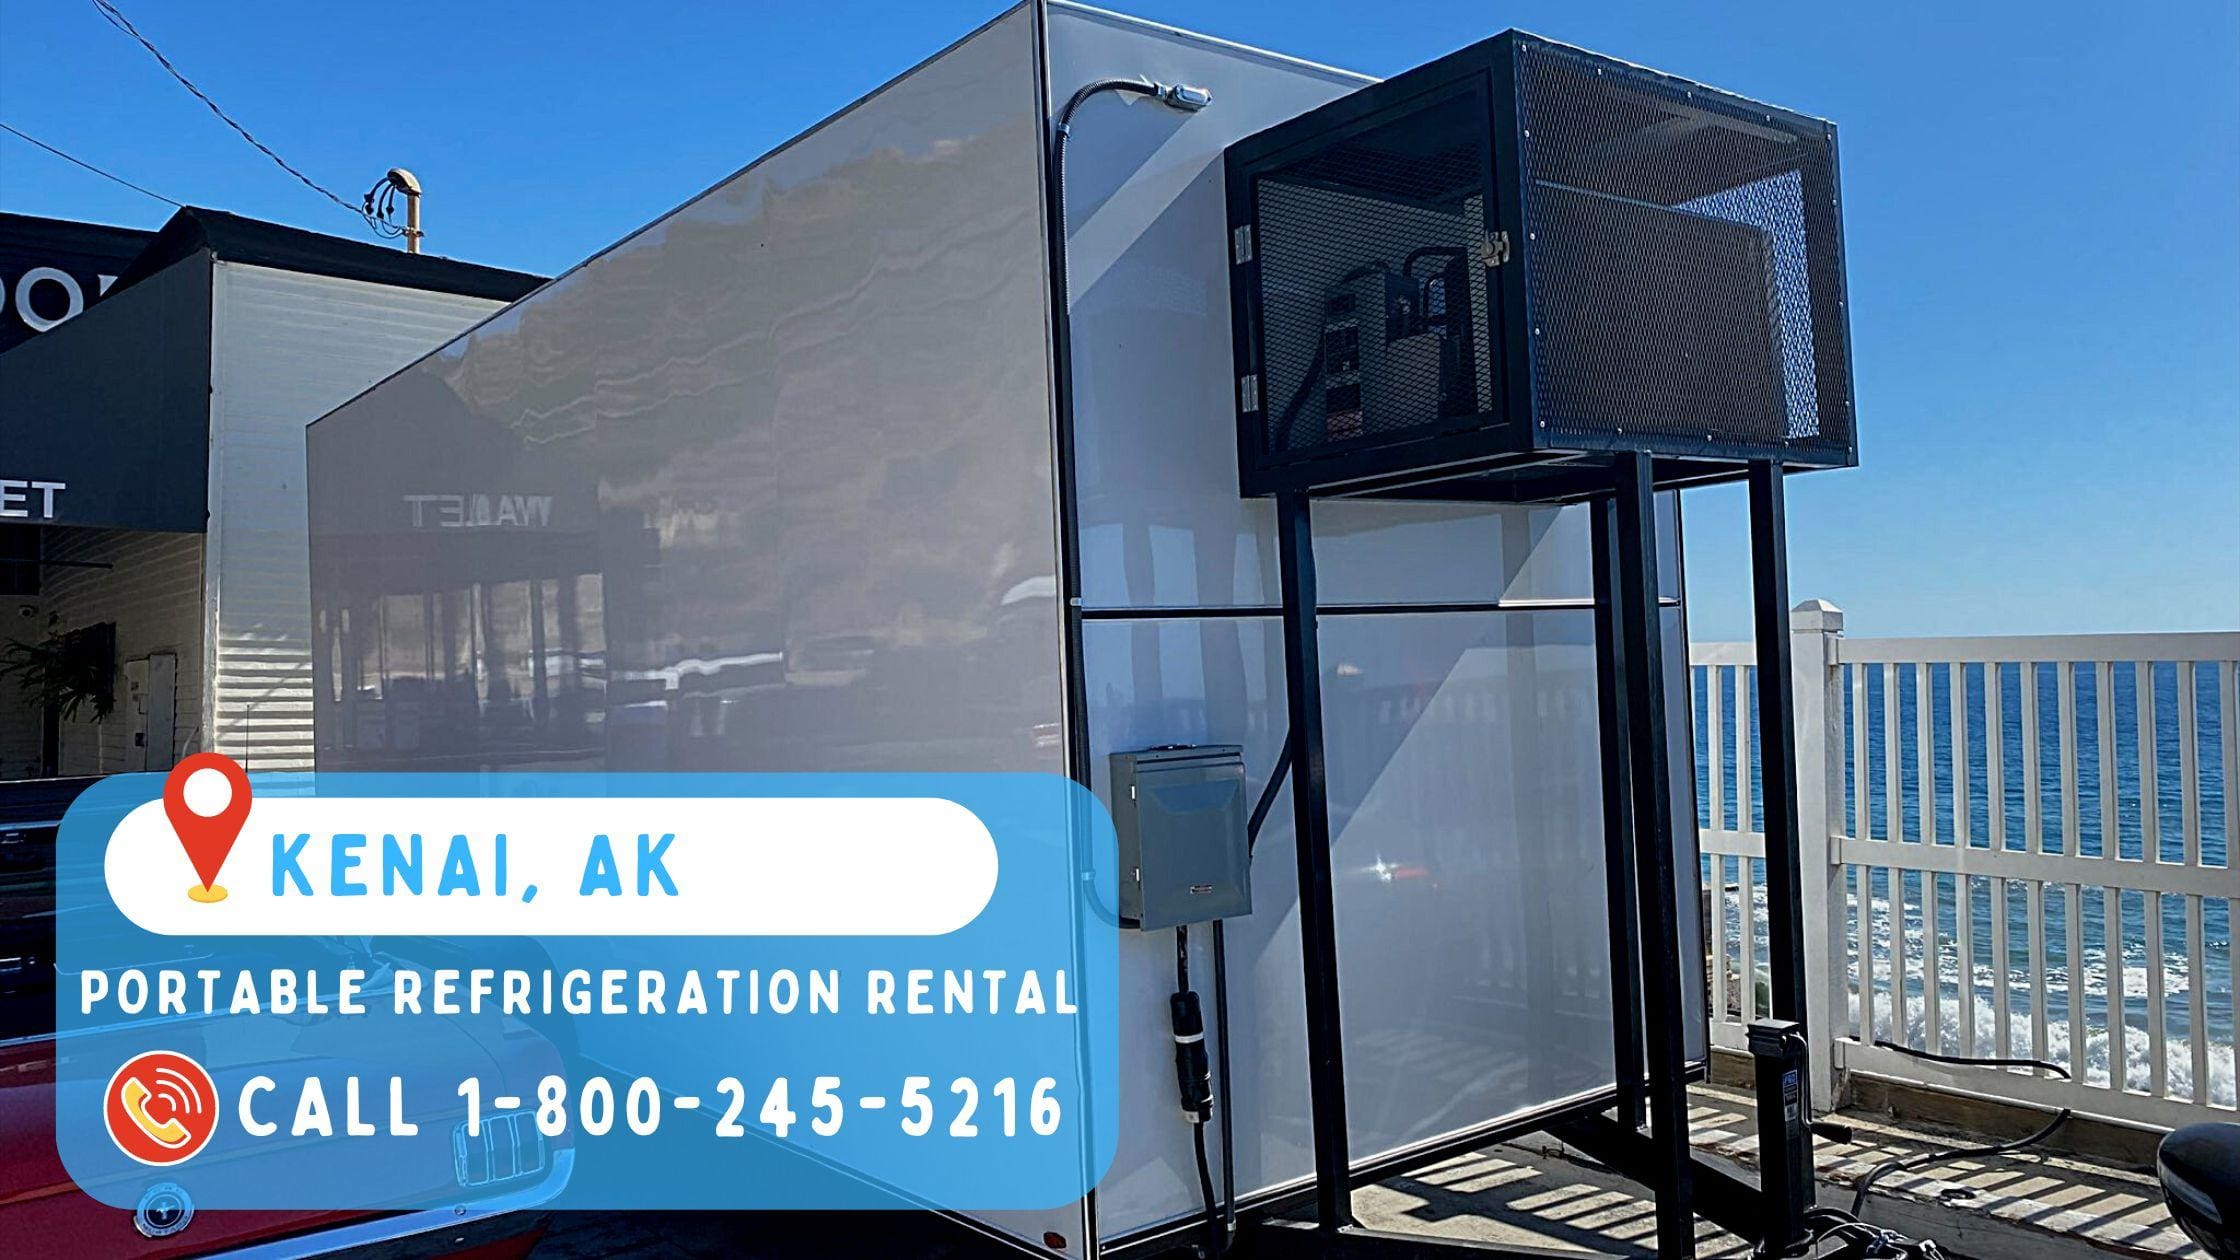 Portable refrigeration rental in Kenai